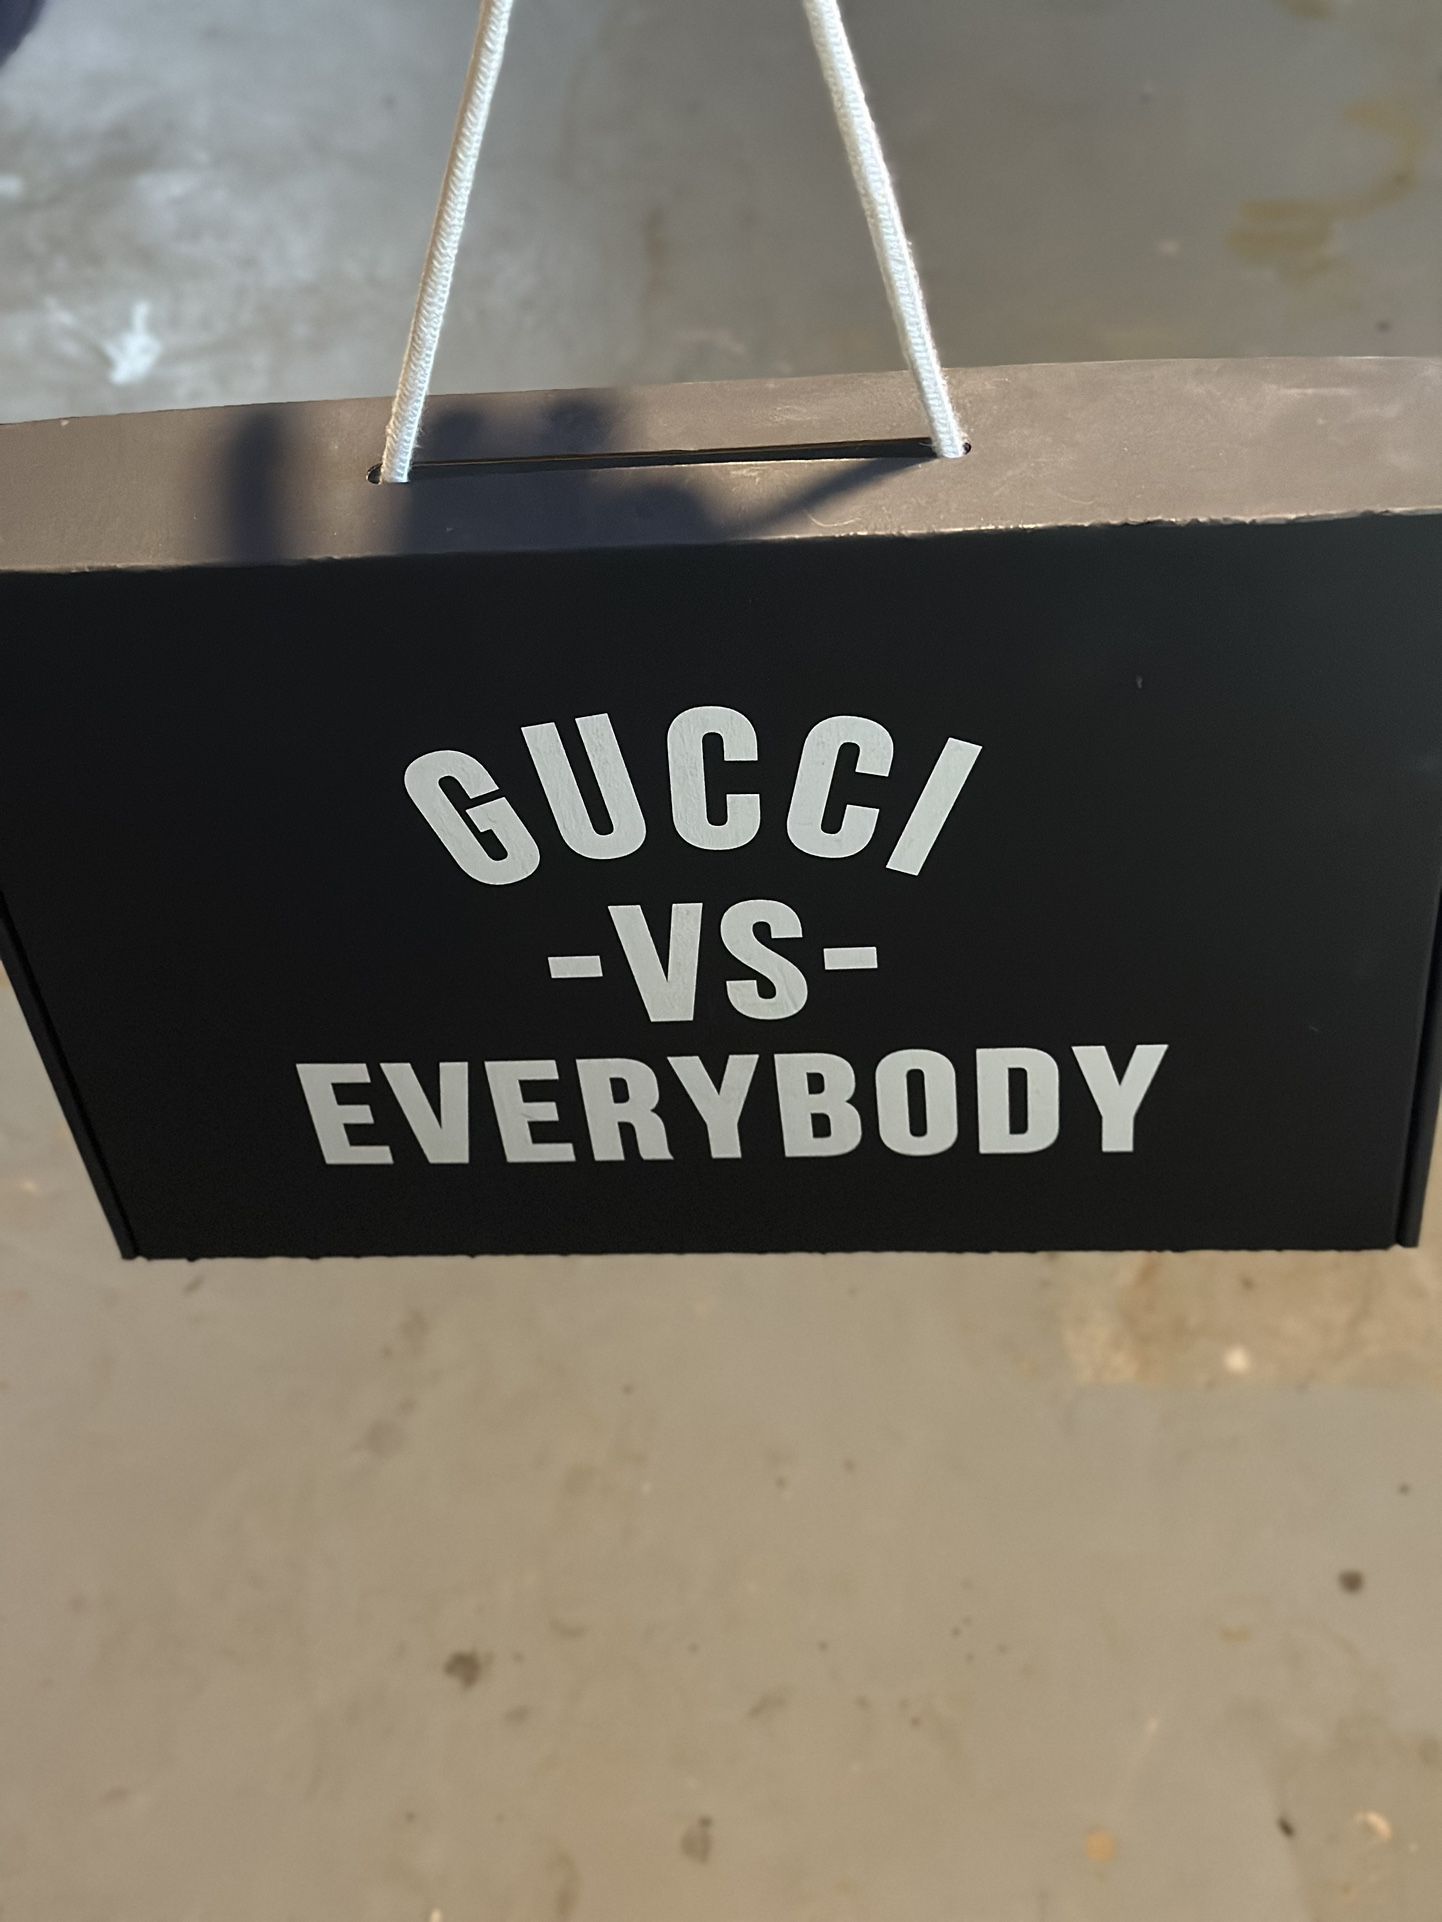 Atlanta vs EveryBody Gucci Tshirt